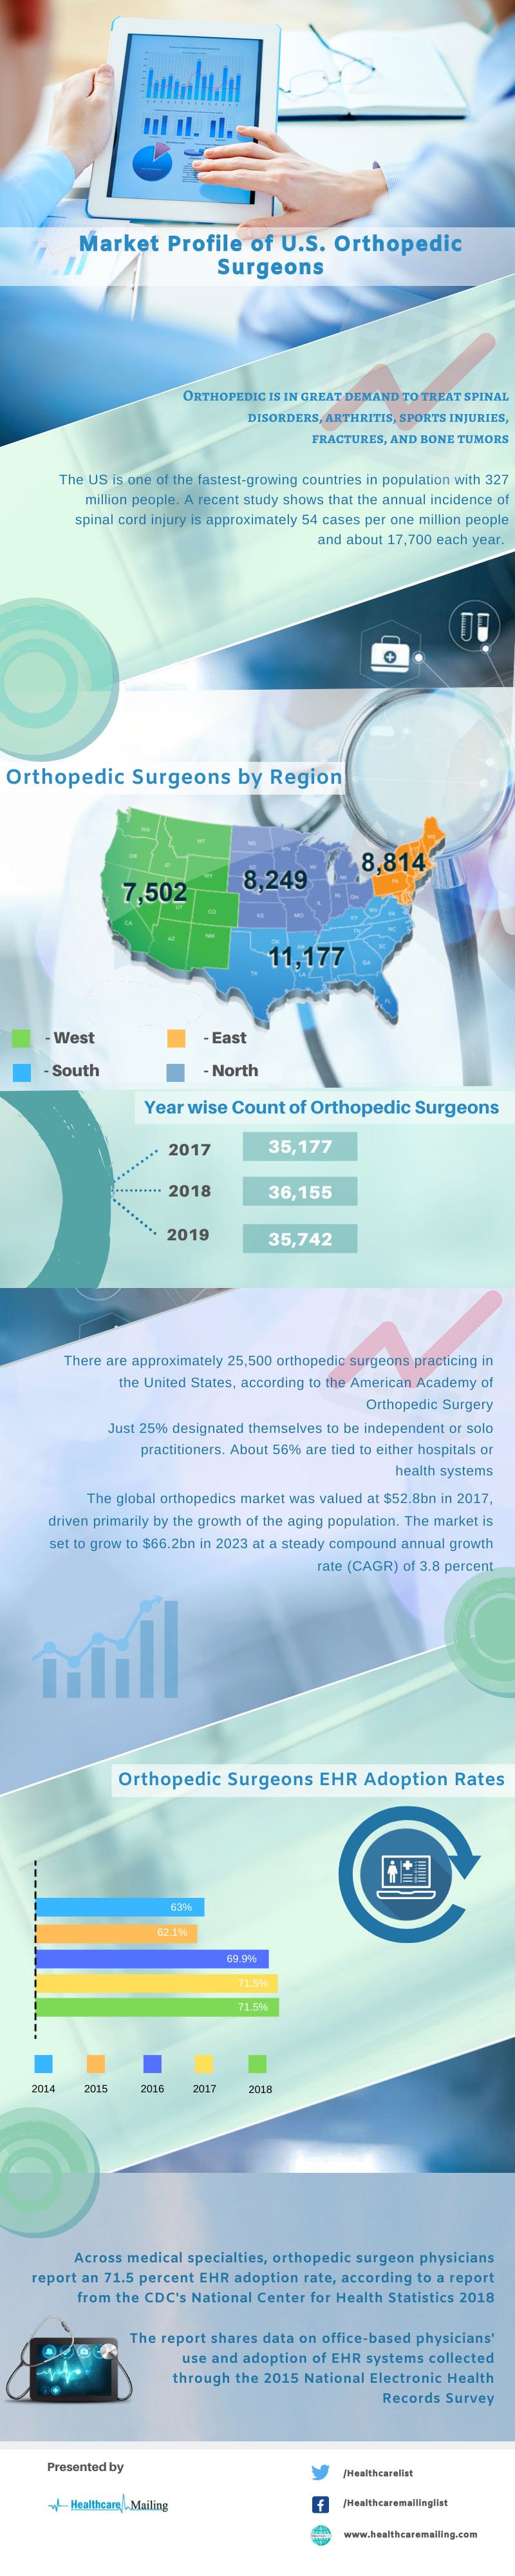 market-profile-of-us-orthopedic-surgeons